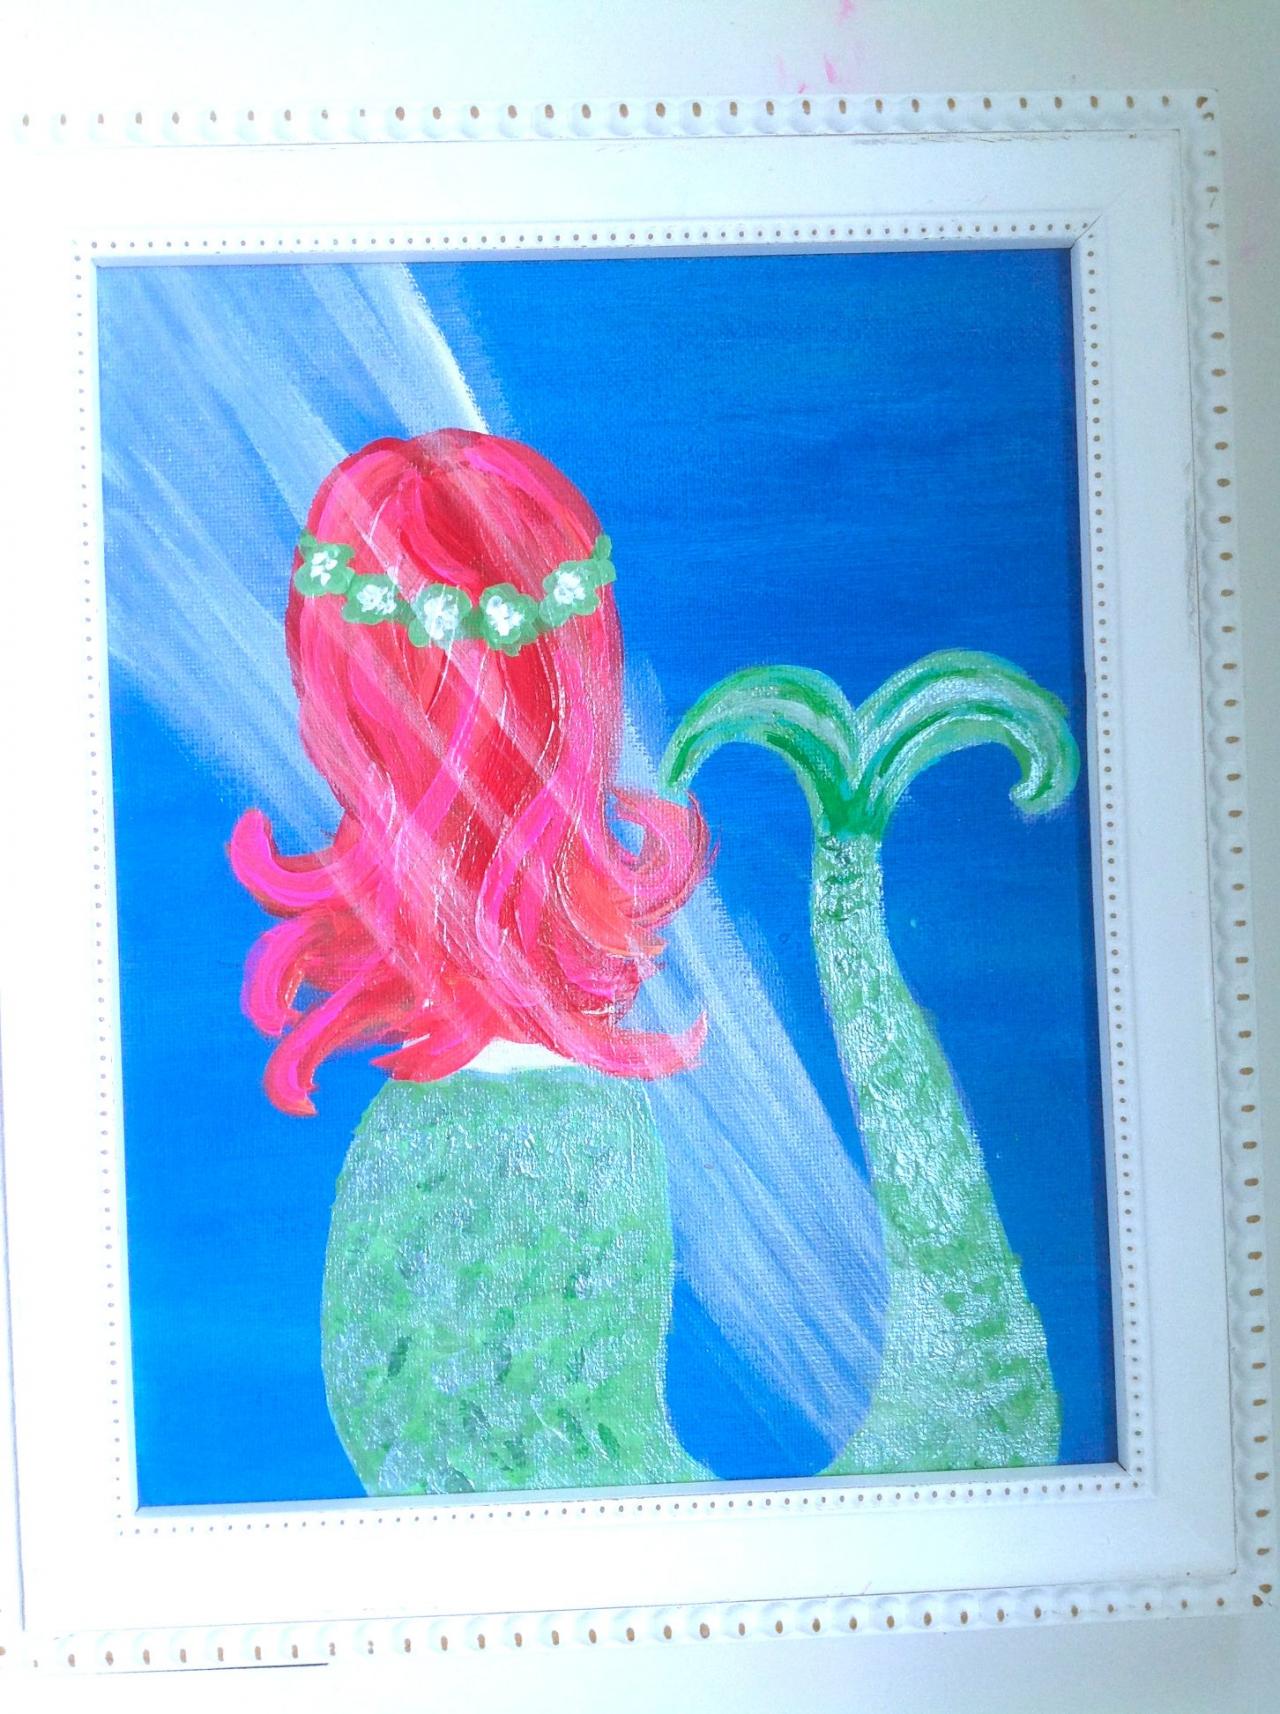 Mini Canvas Art, Mermaid Painting/ Original Painting On Canvas / Mermaid Art / Painting / Small Home Decor / Whimsical Painting / Fantasy /